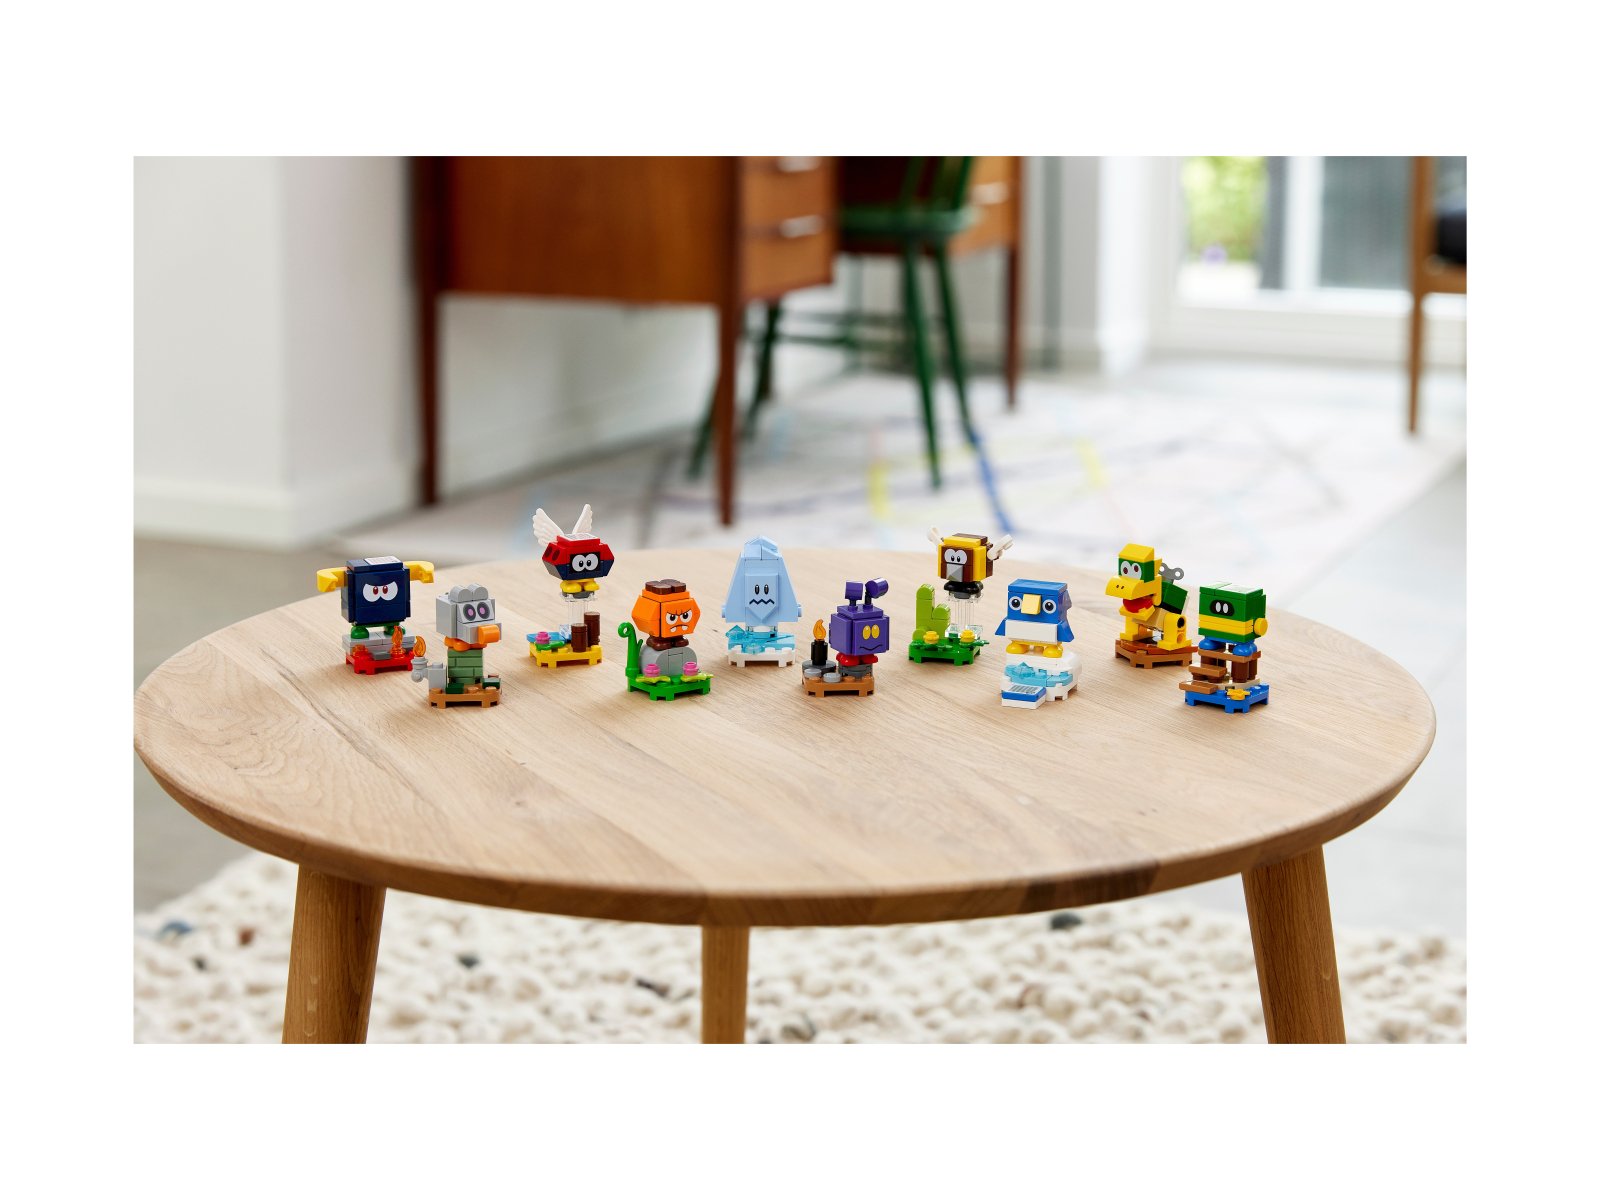 LEGO Super Mario Zestawy postaci — seria 4 71402